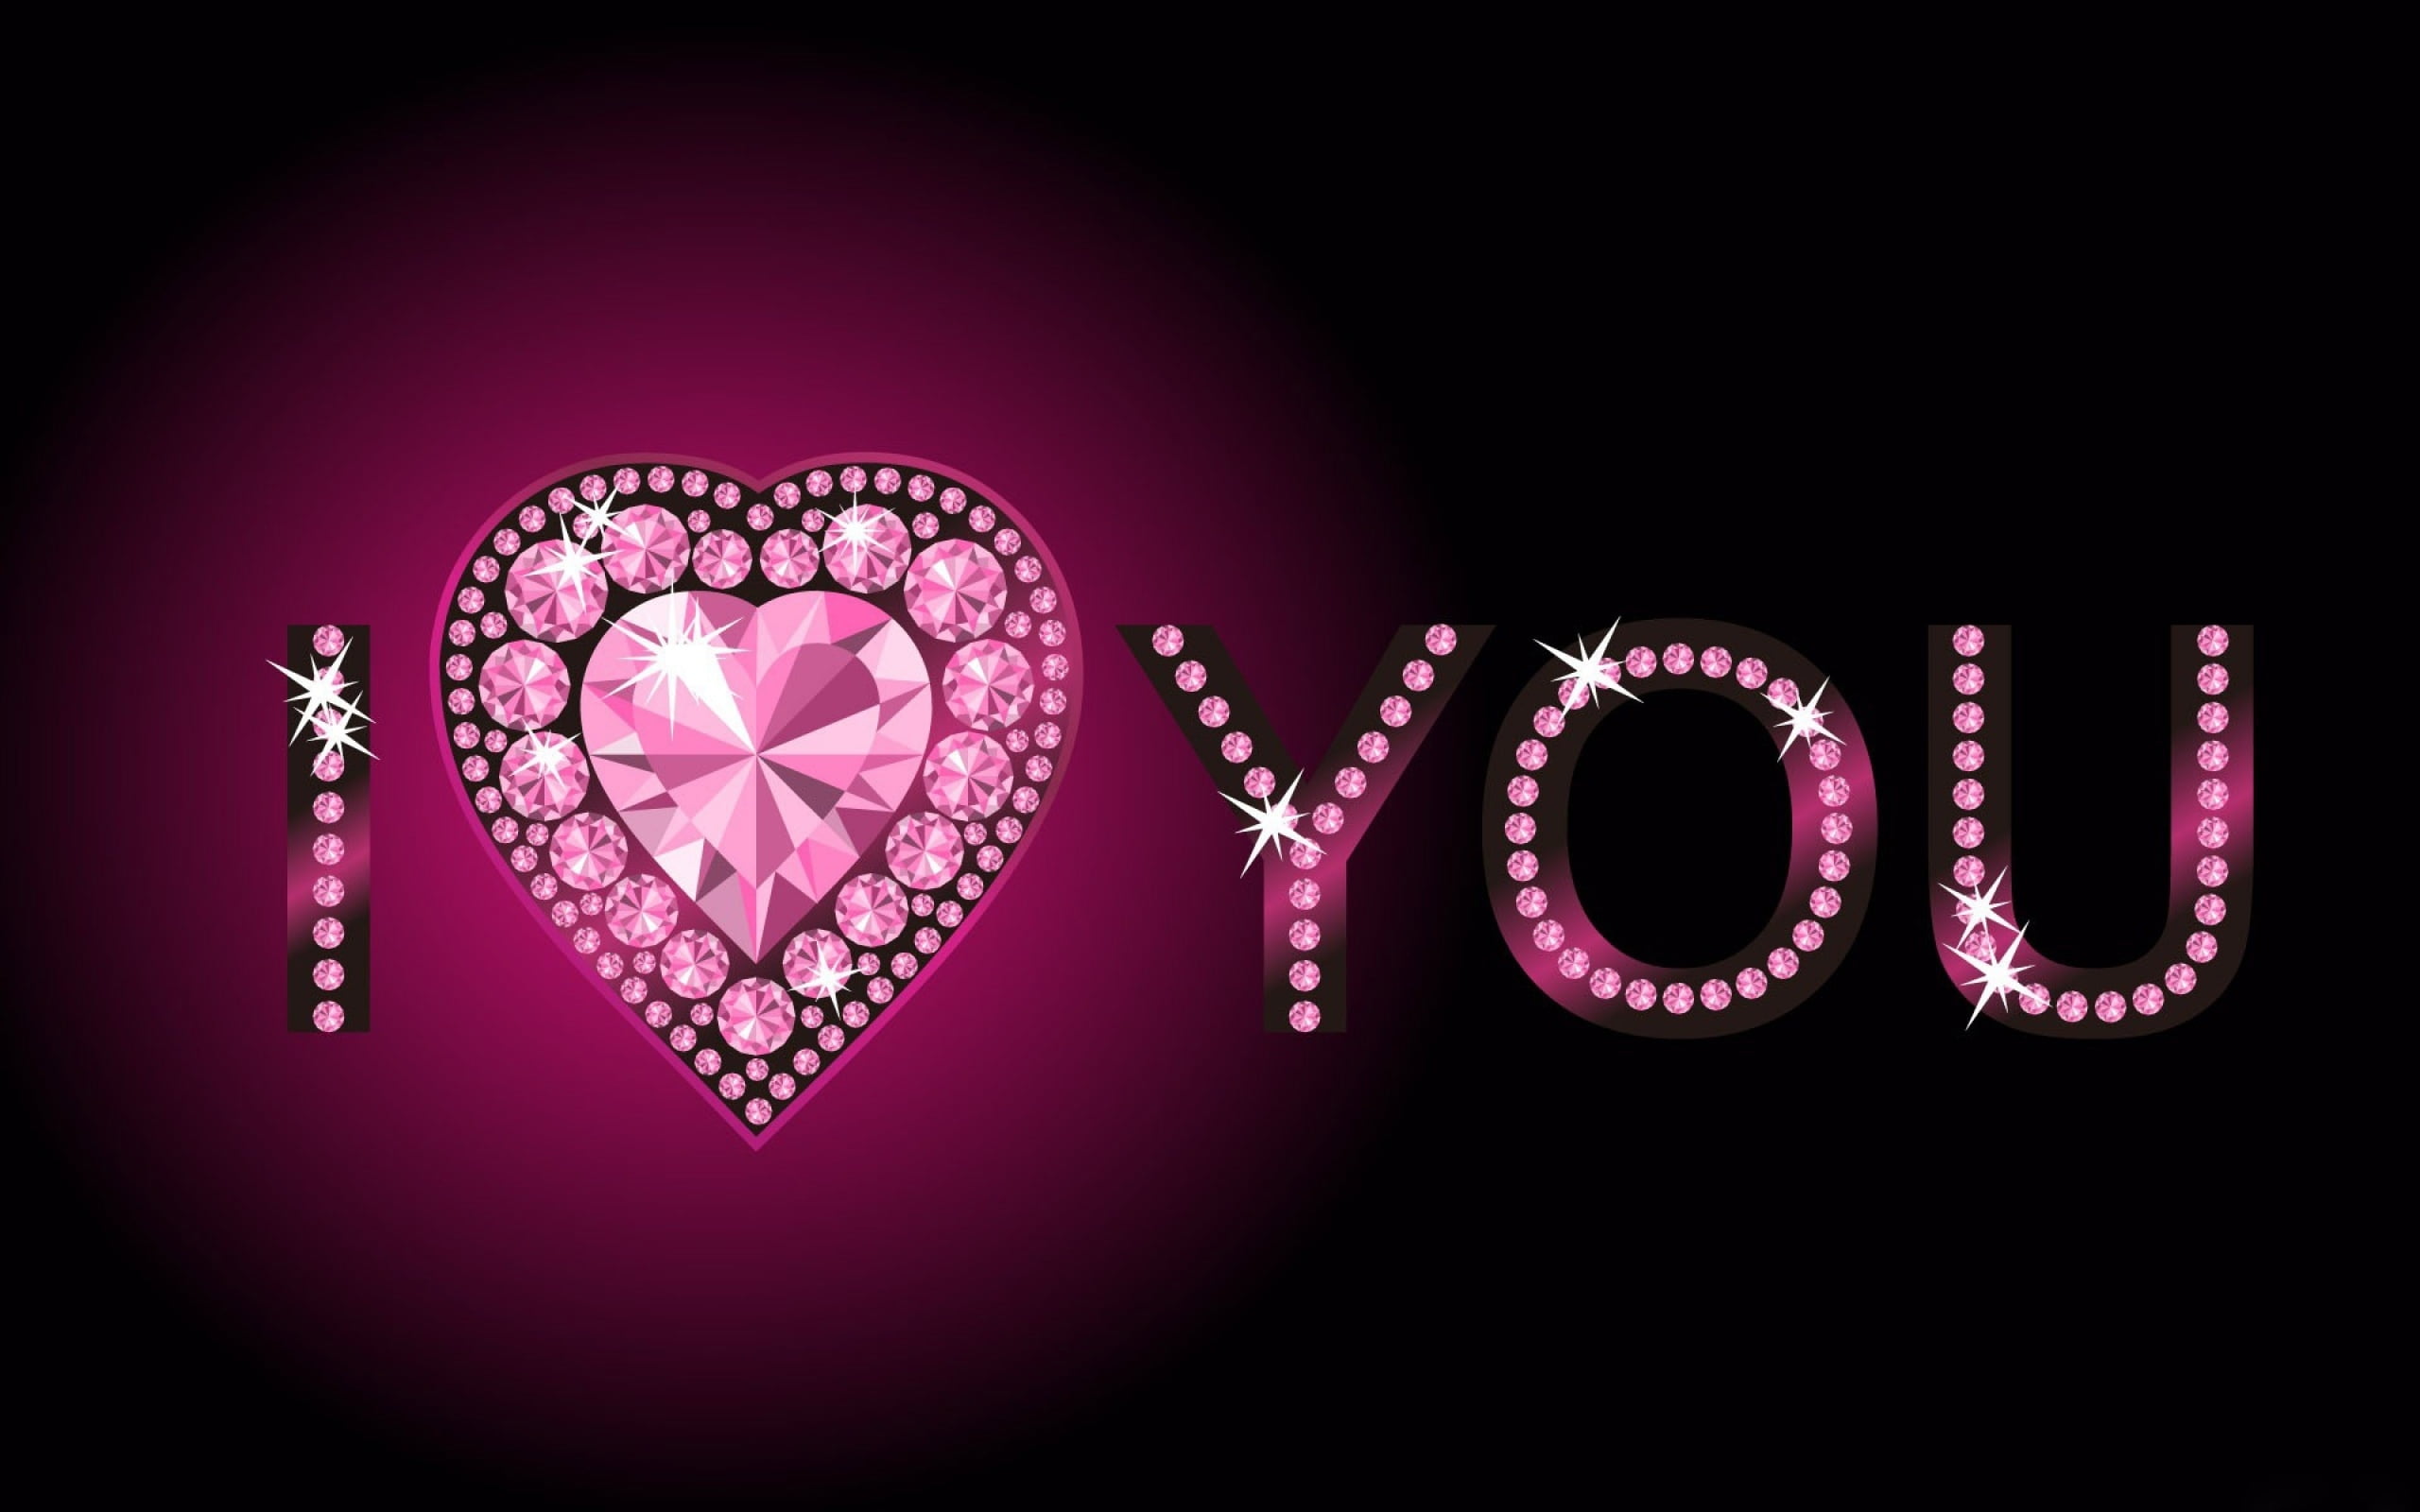 Diamond Love Heart, pink and black i love you illustration, positive emotion